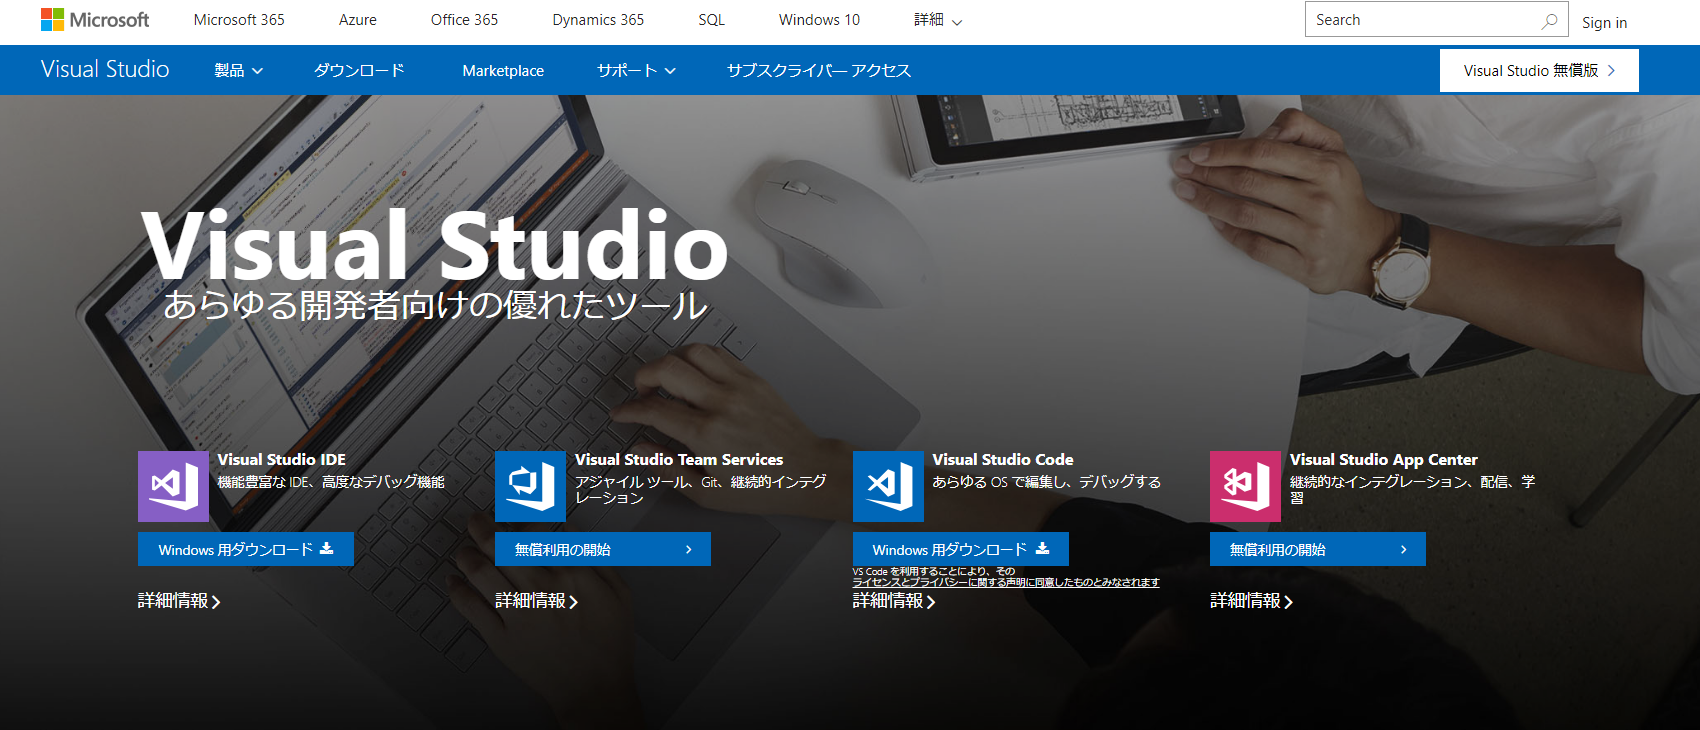 Microsoft Visual Studio Official Web